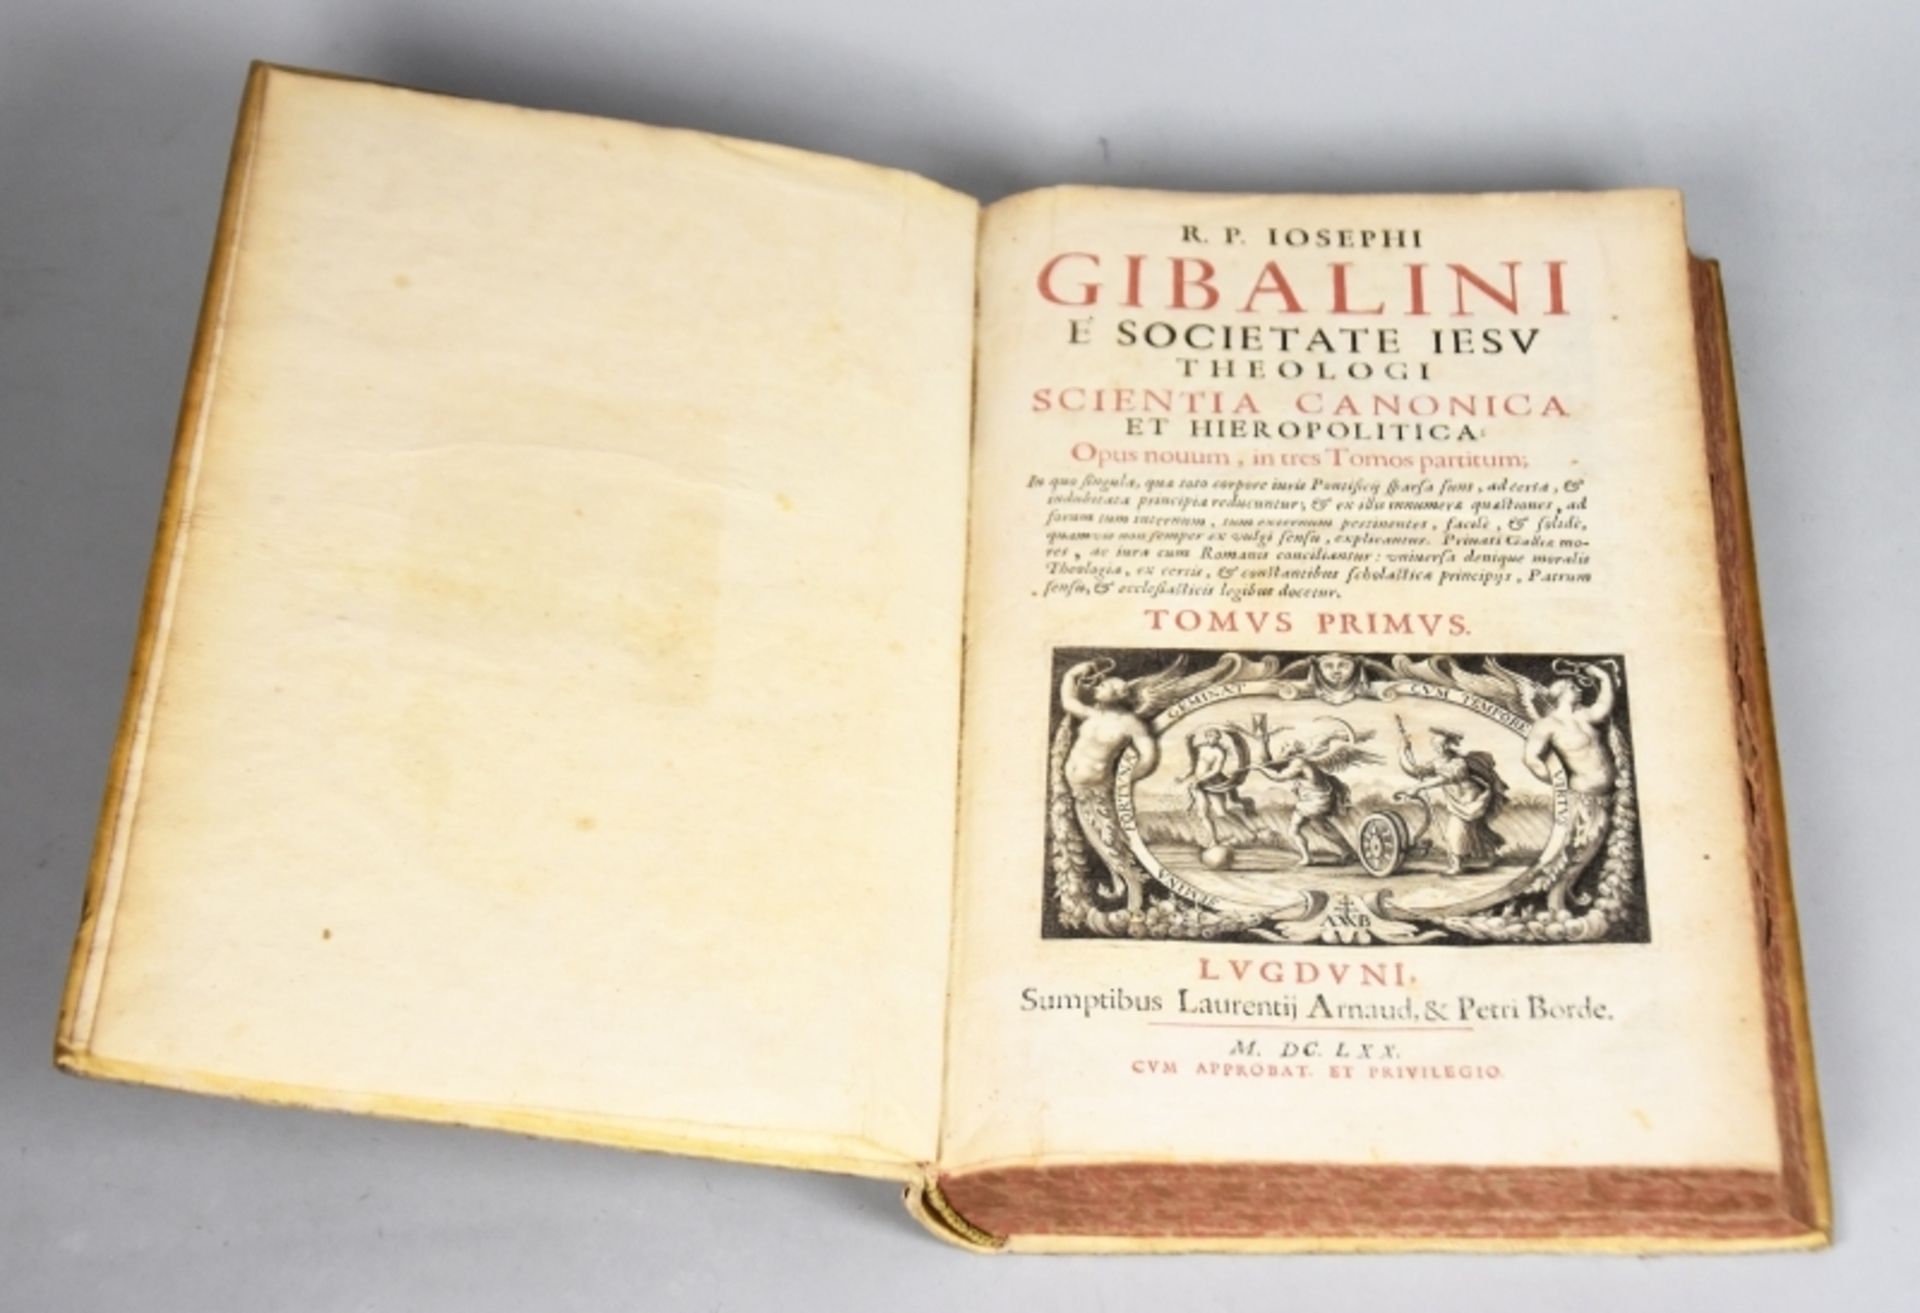 GIBALINI "E Societate Iesu. Theologi Scientia Canonica et Hieropolitica" - Image 2 of 4